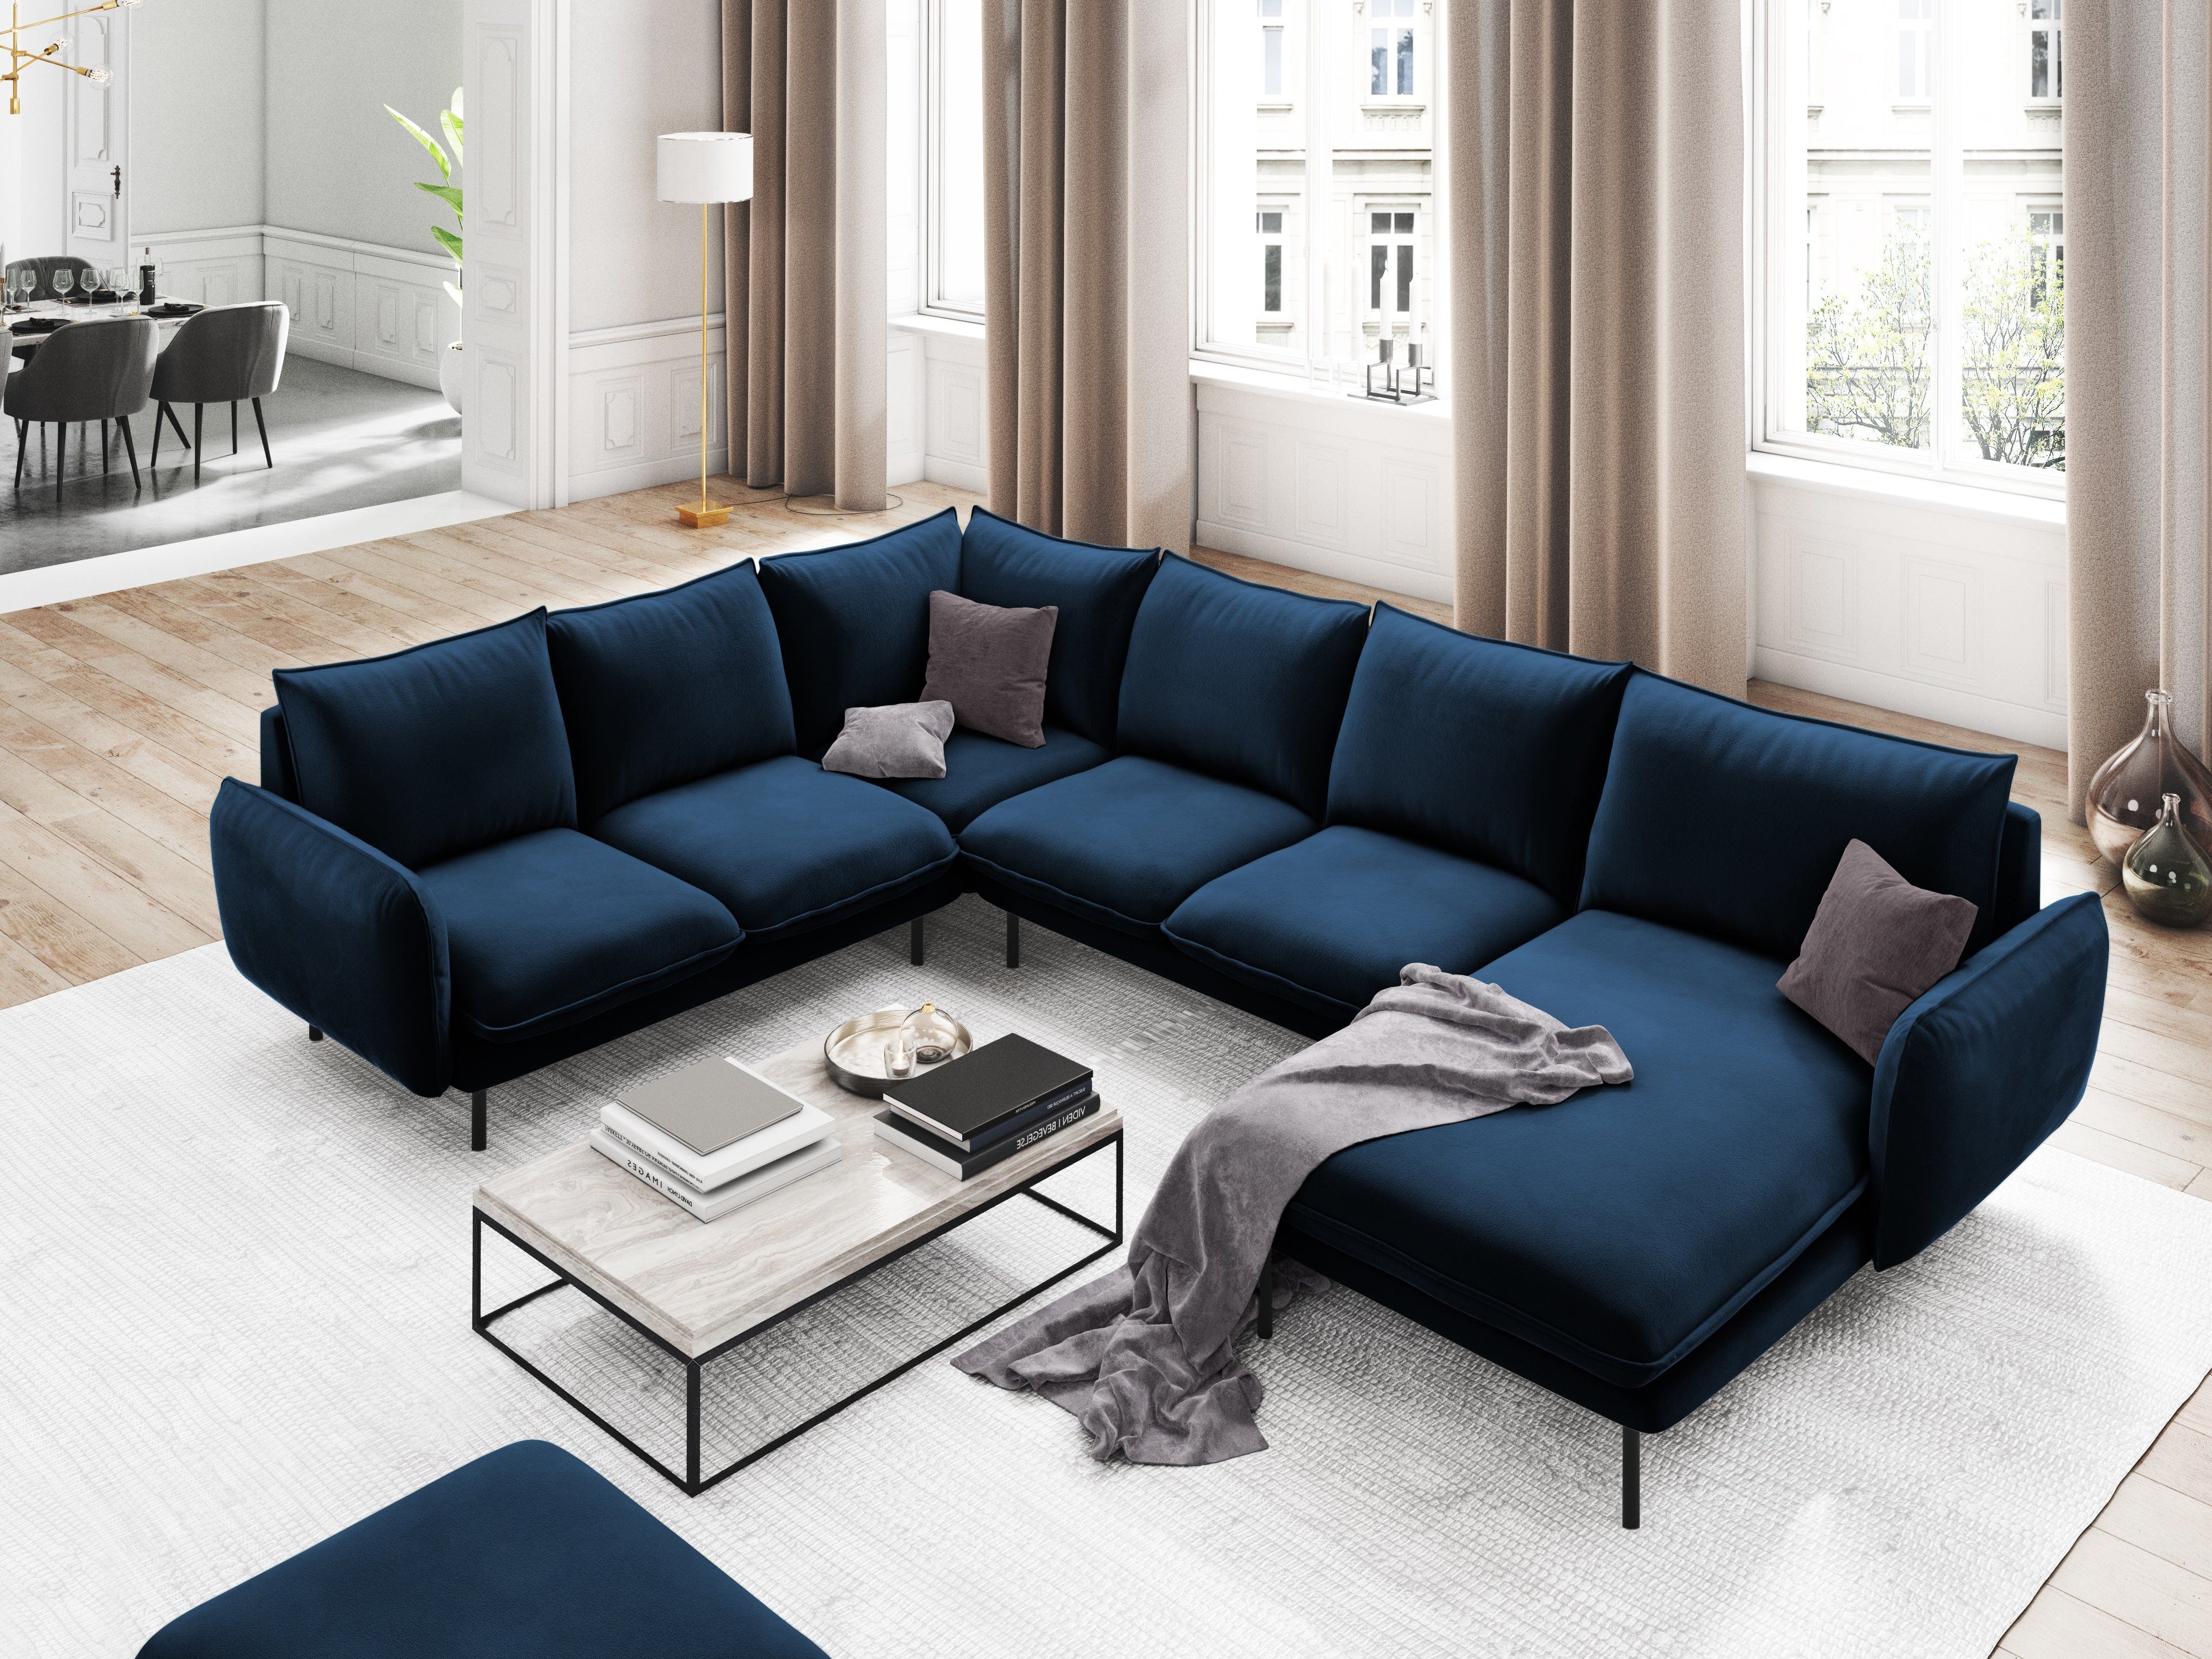 Left side velvet panoramic corner sofa VIENNA blue with black base